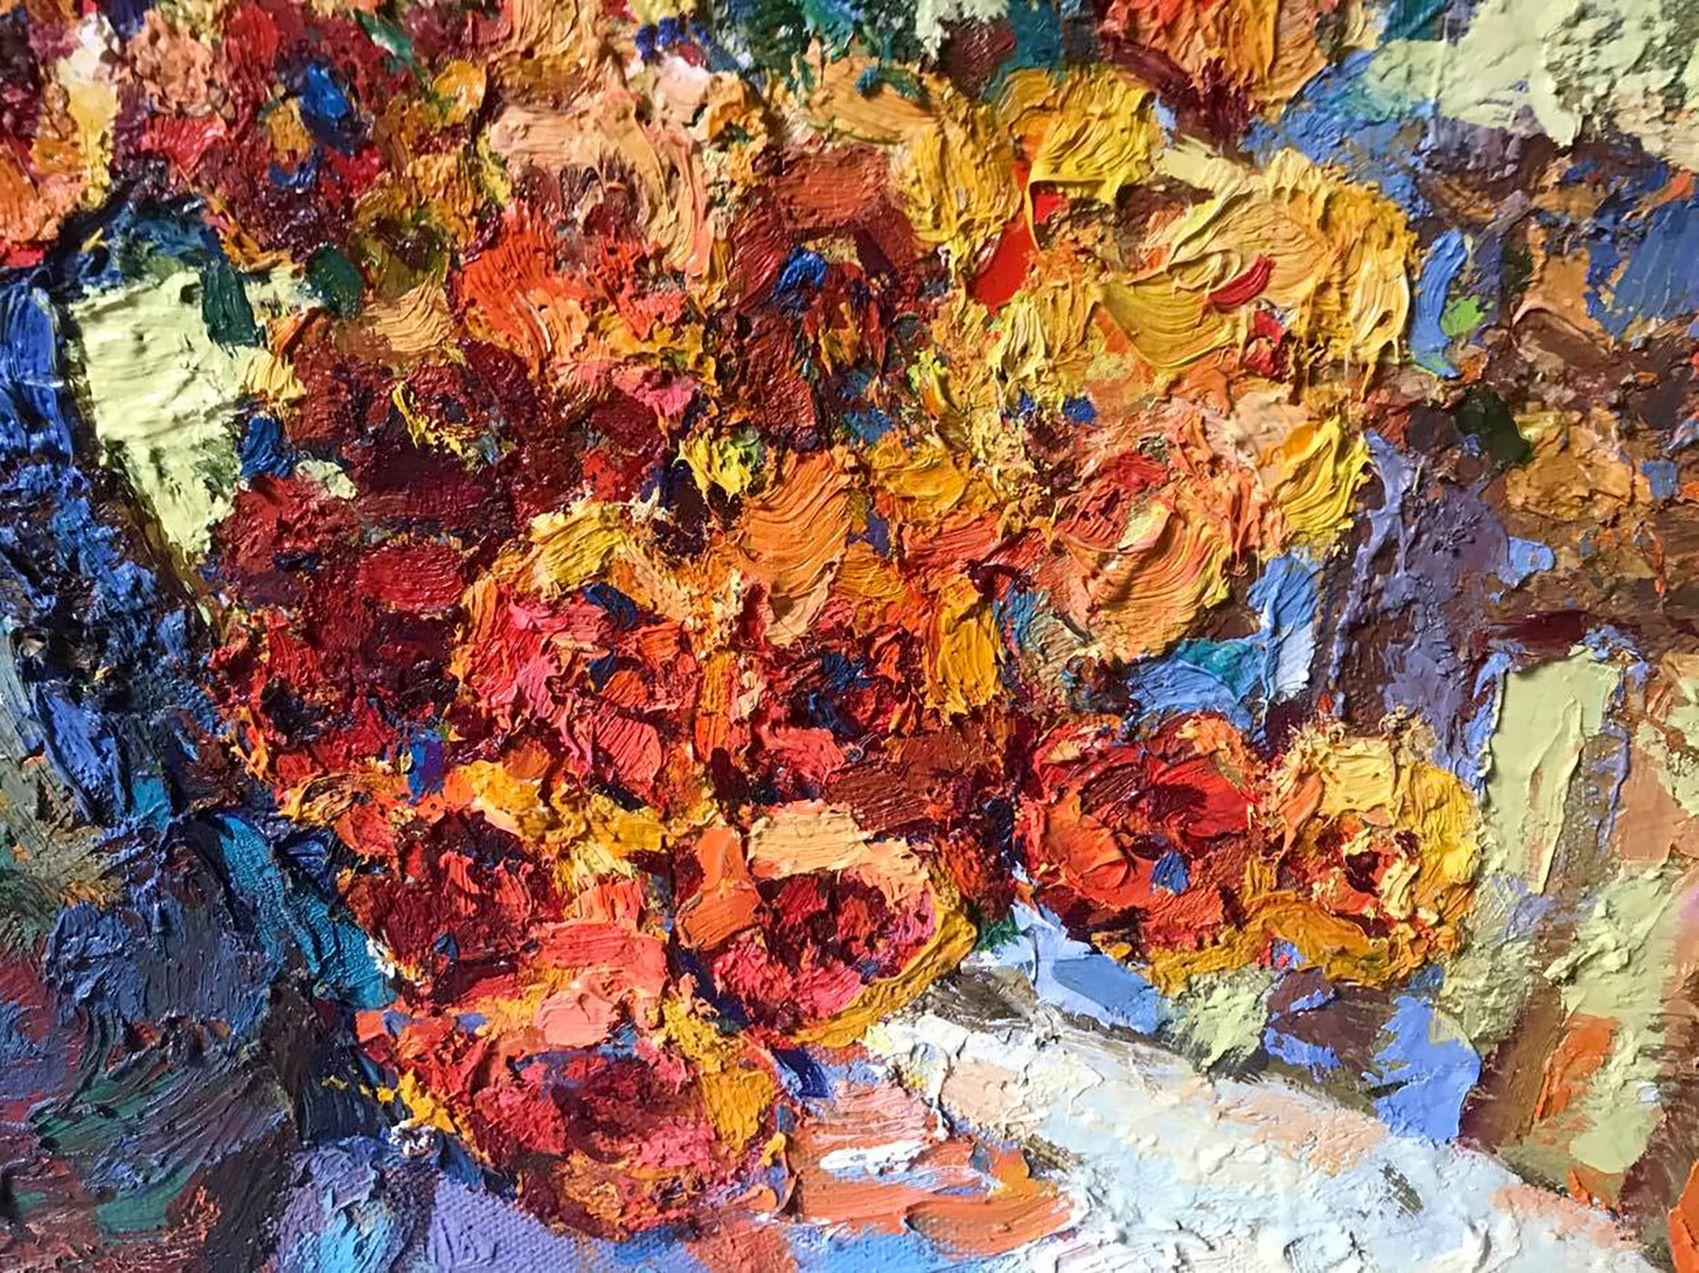 Artist: Oksana Kalenyuk 
Work: Original oil painting, handmade artwork, one of a kind 
Medium: Oil on canvas 
Year: 2016
Style: Impressionism
Title: Morning Flowers, 
Size: 31.5